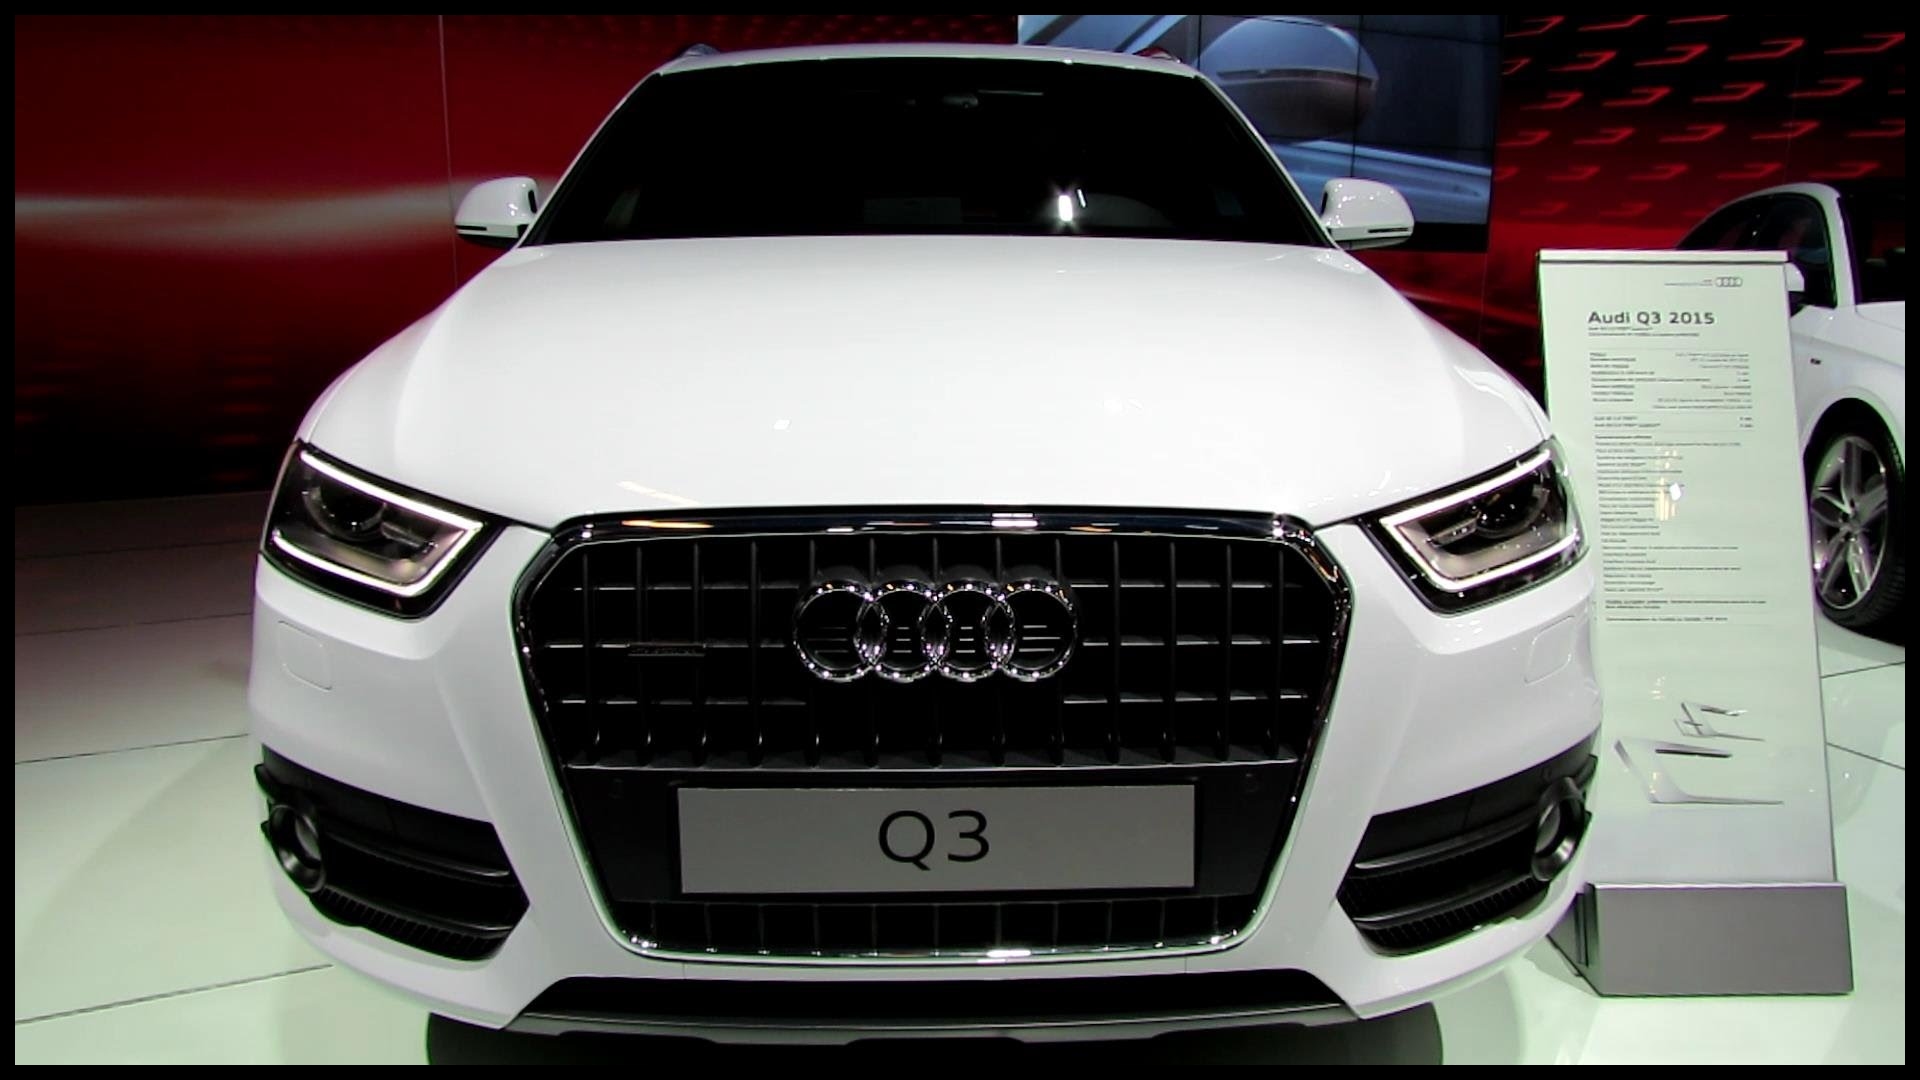 2015 Audi Q3 TFSI Quattro Exterior and Interior Walkaround 2014 Montreal Auto Show